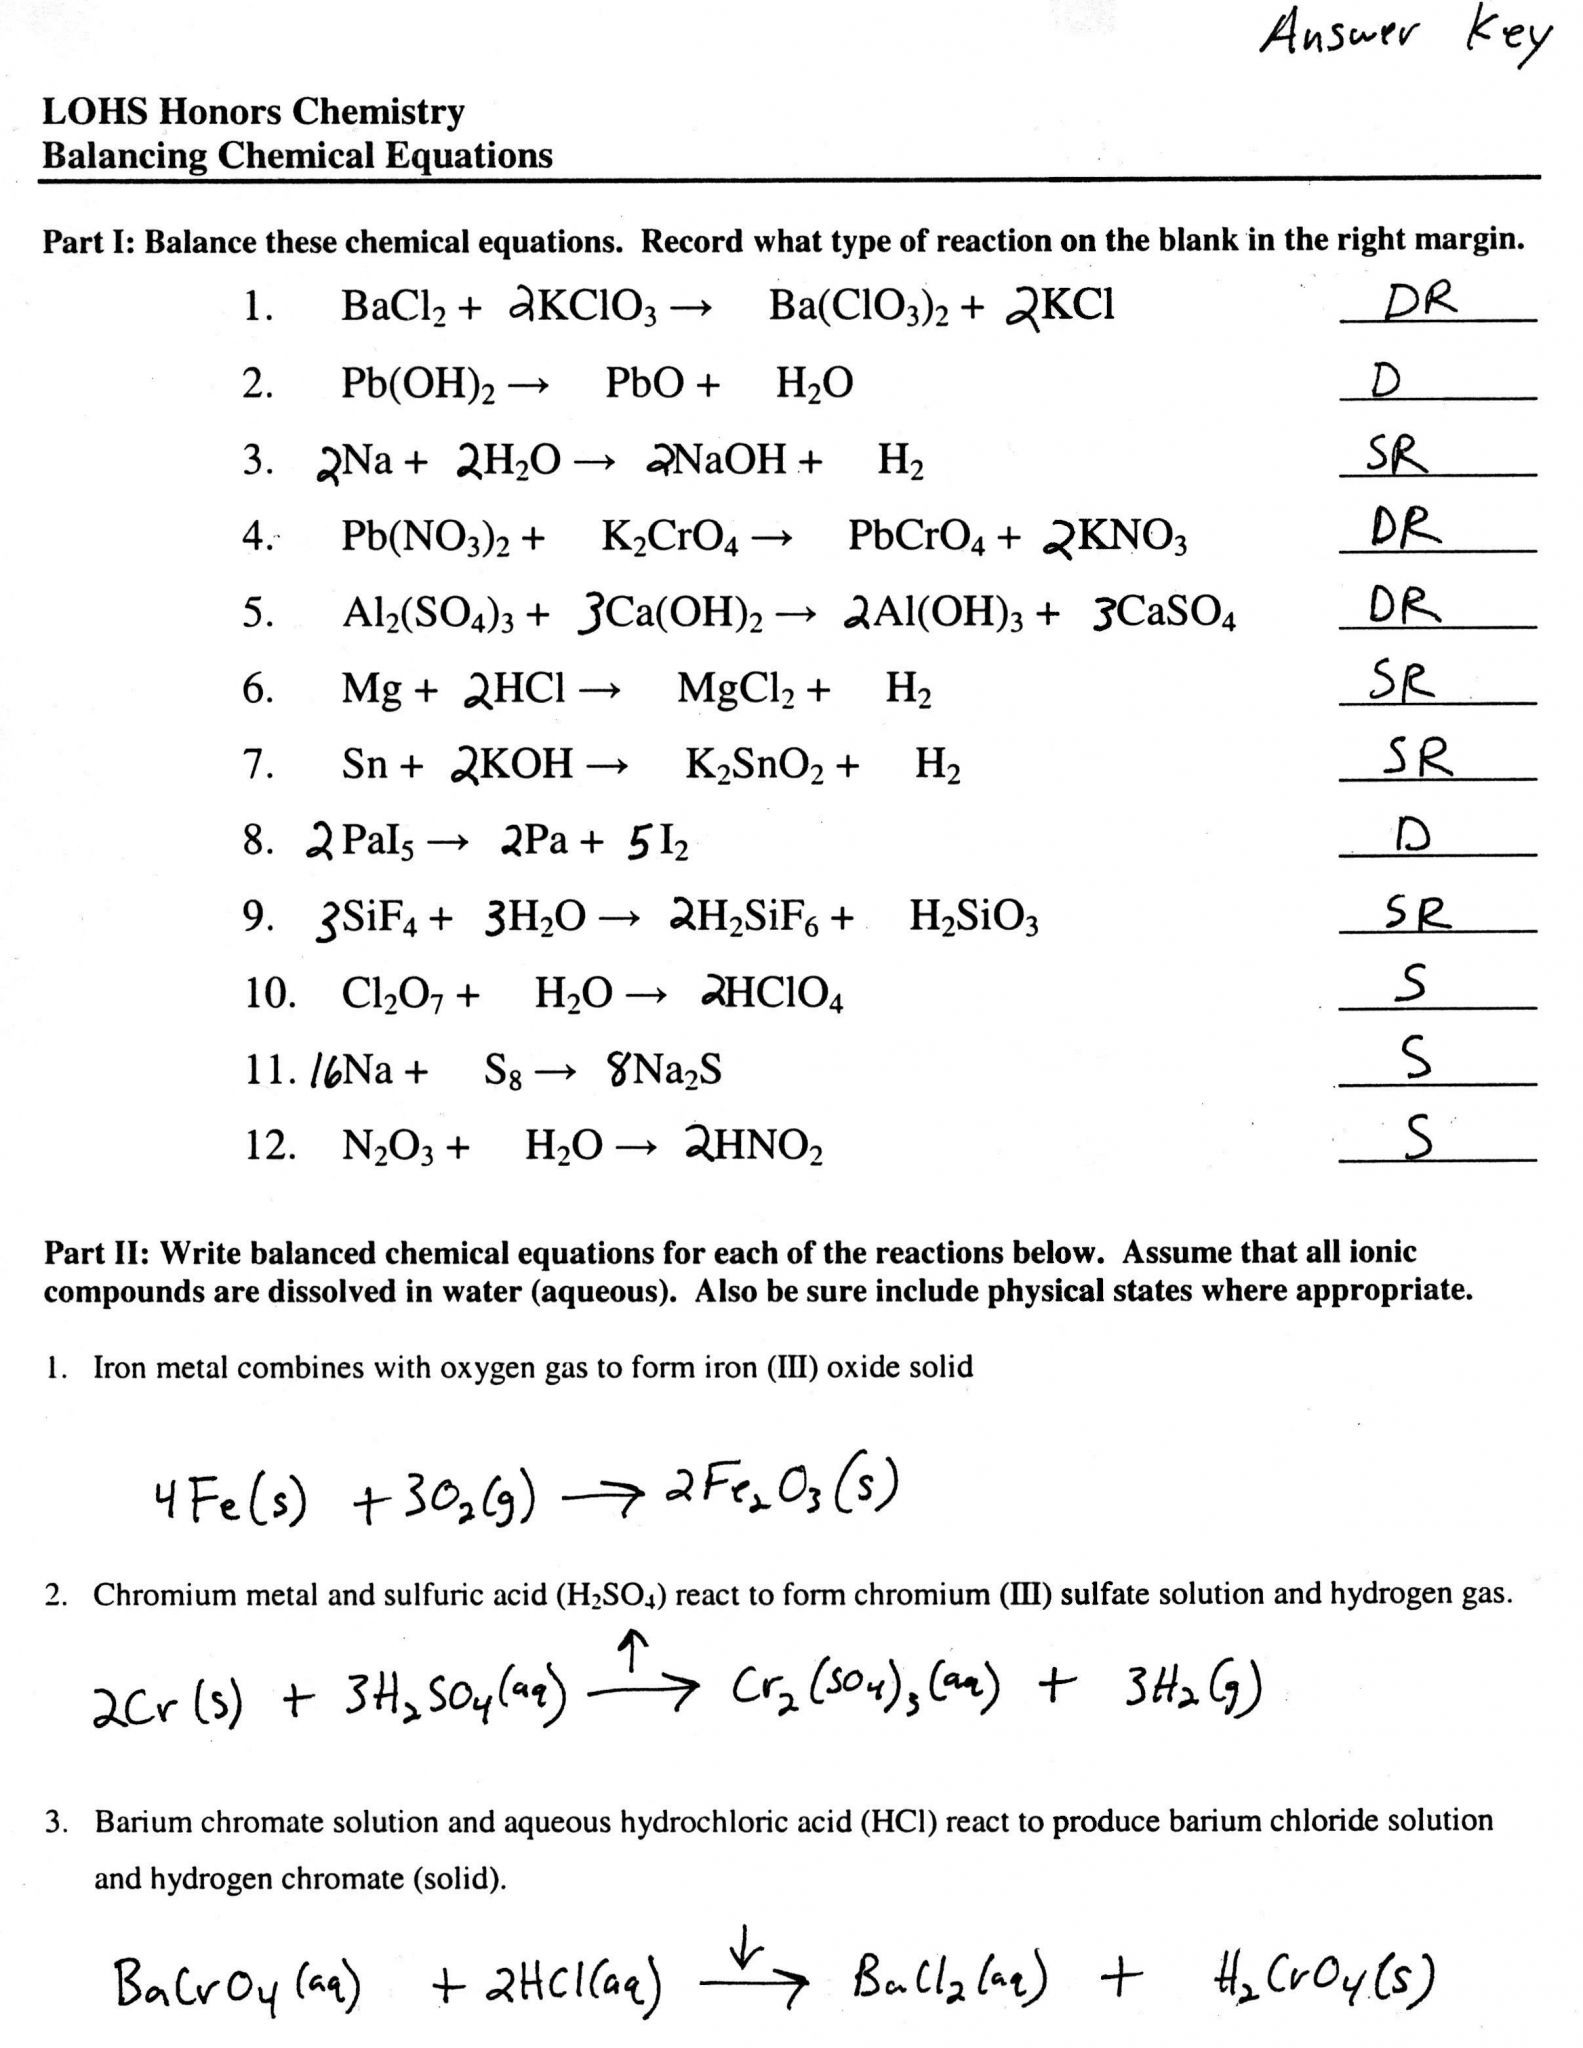 balancing redox chemical equations calculator